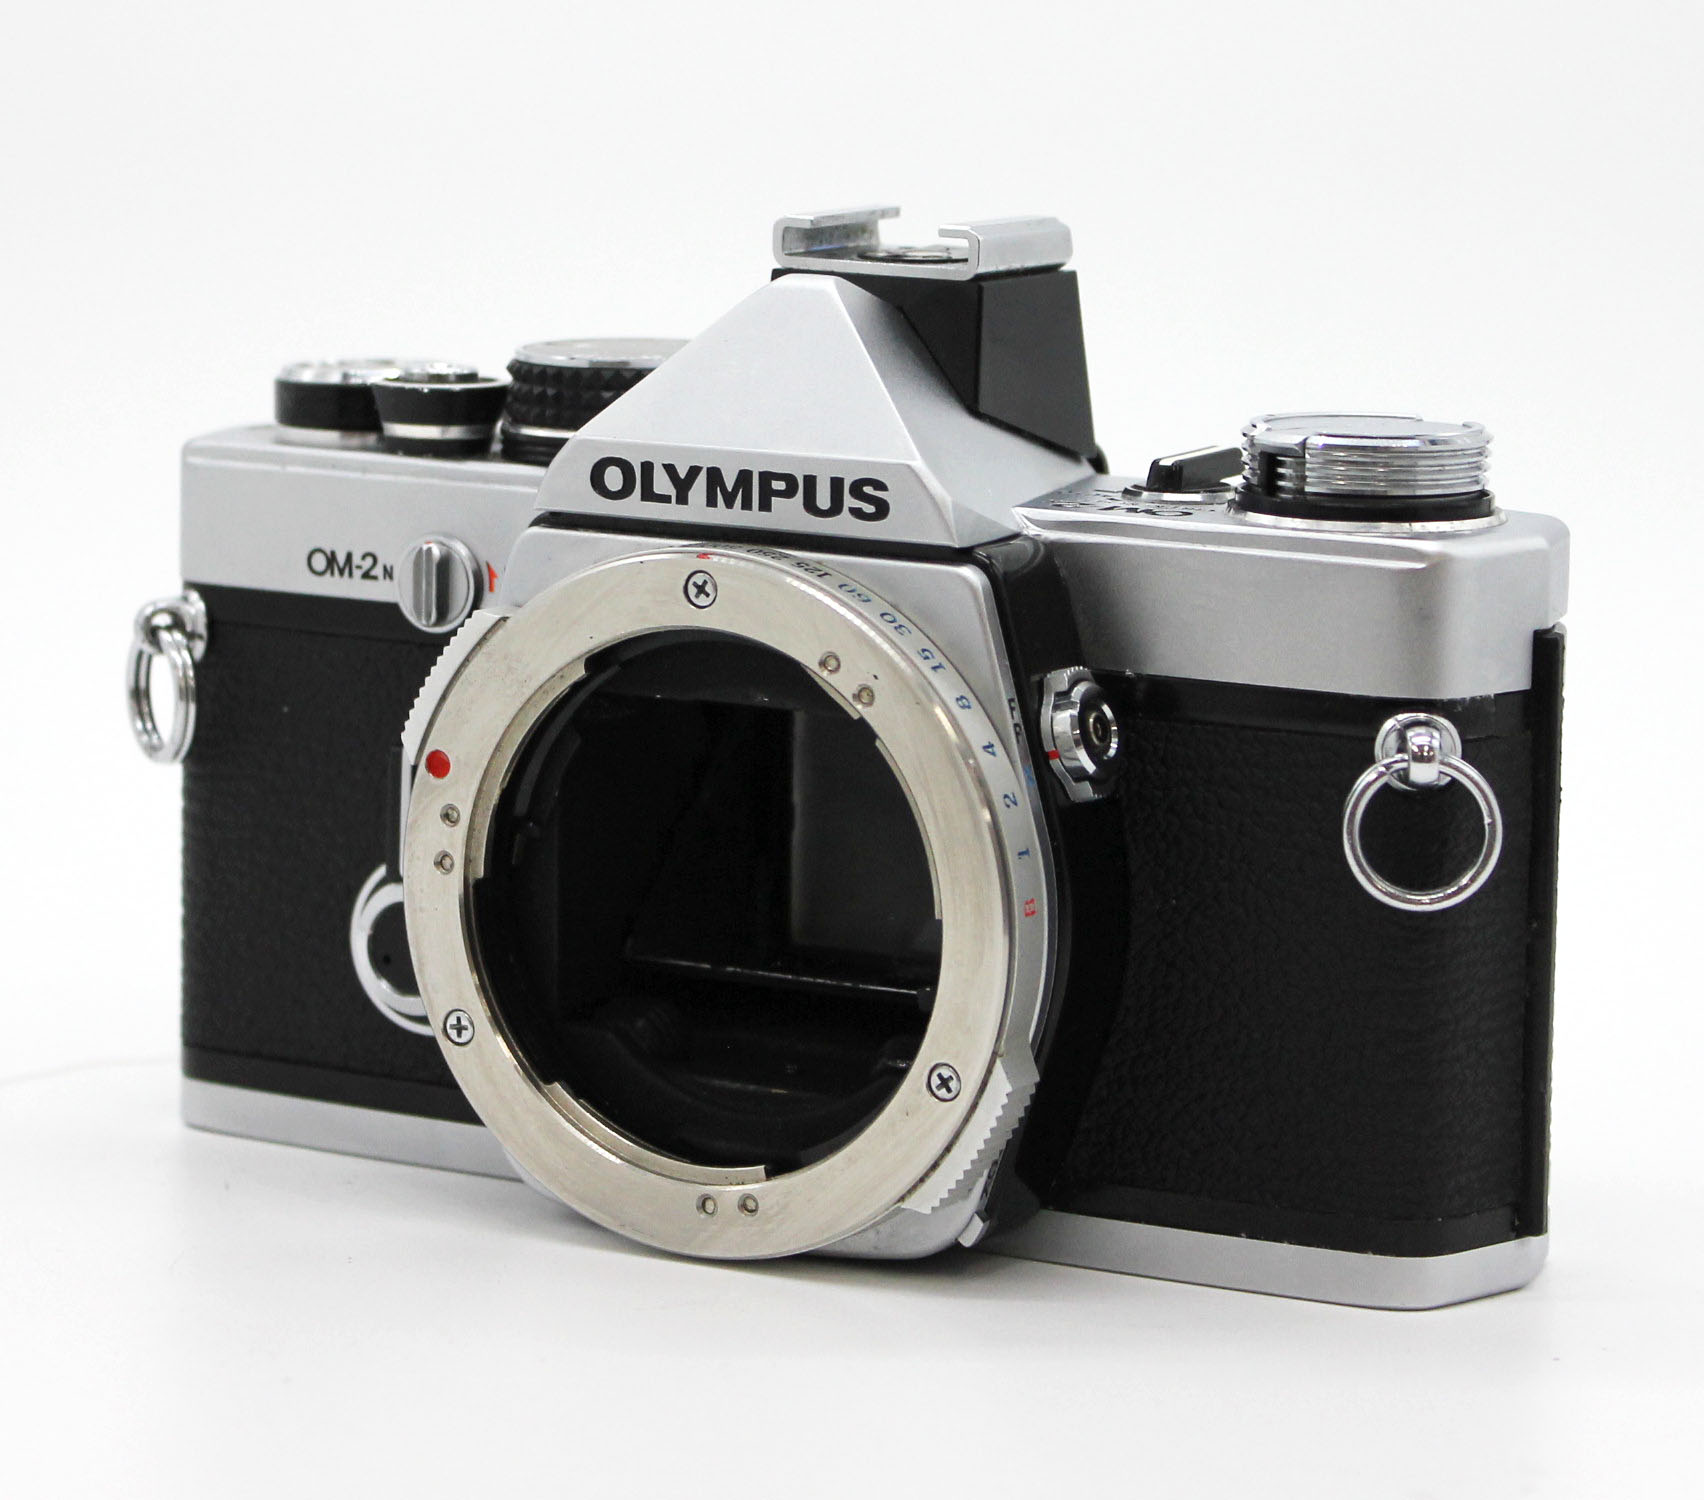 Olympus OM-2N 35mm SLR Film Camera with Macro 50mm F/3.5 Lens, Winder & Flash from Japan Photo 1